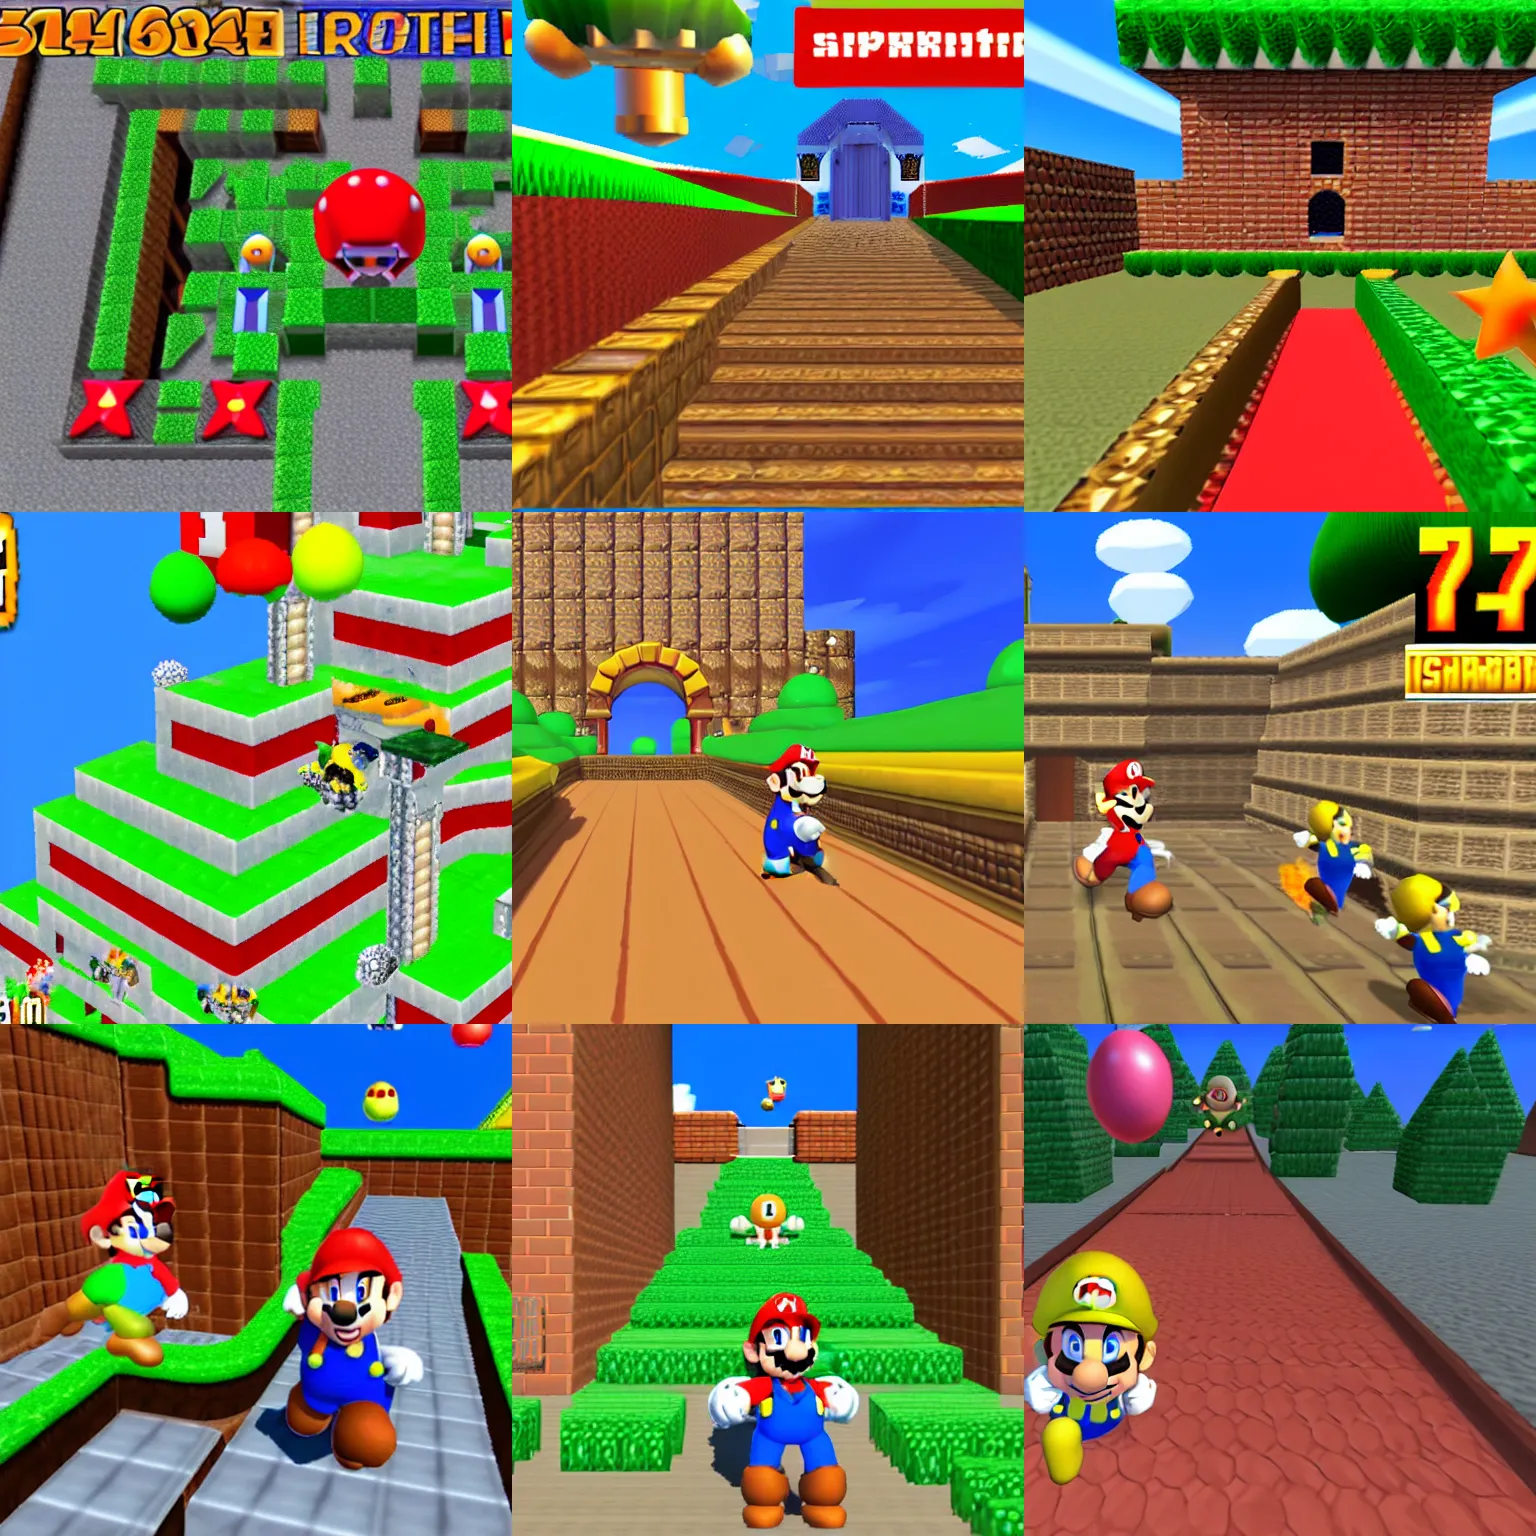 Prompt: Screenshot from Super Mario 64